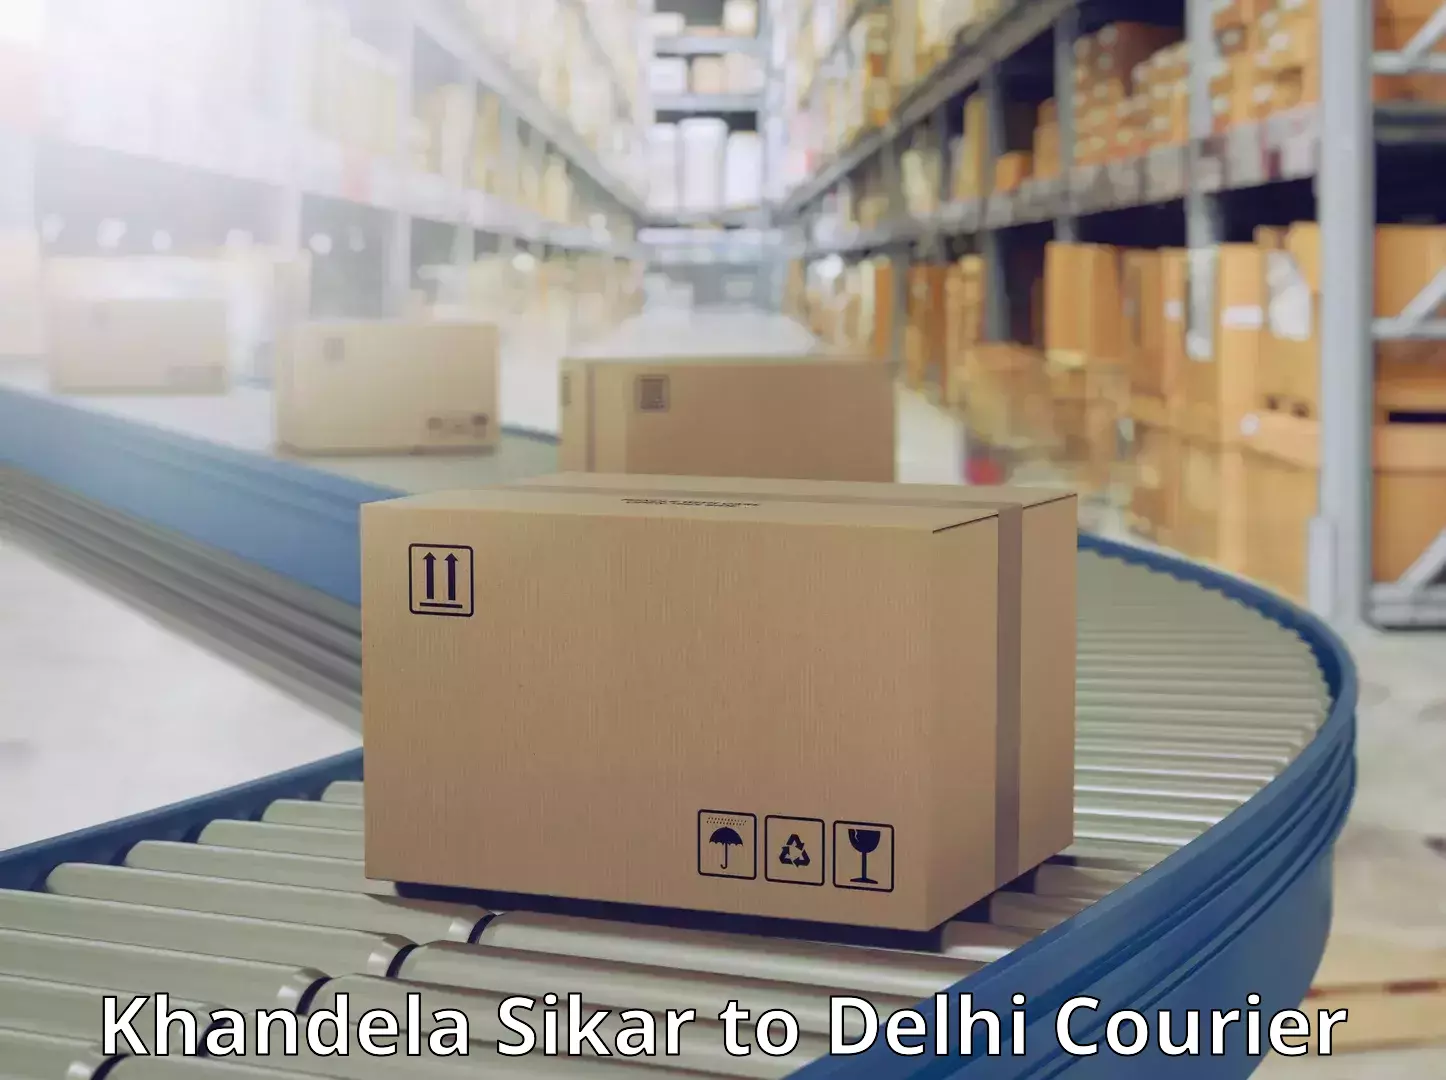 Overnight delivery services Khandela Sikar to Delhi